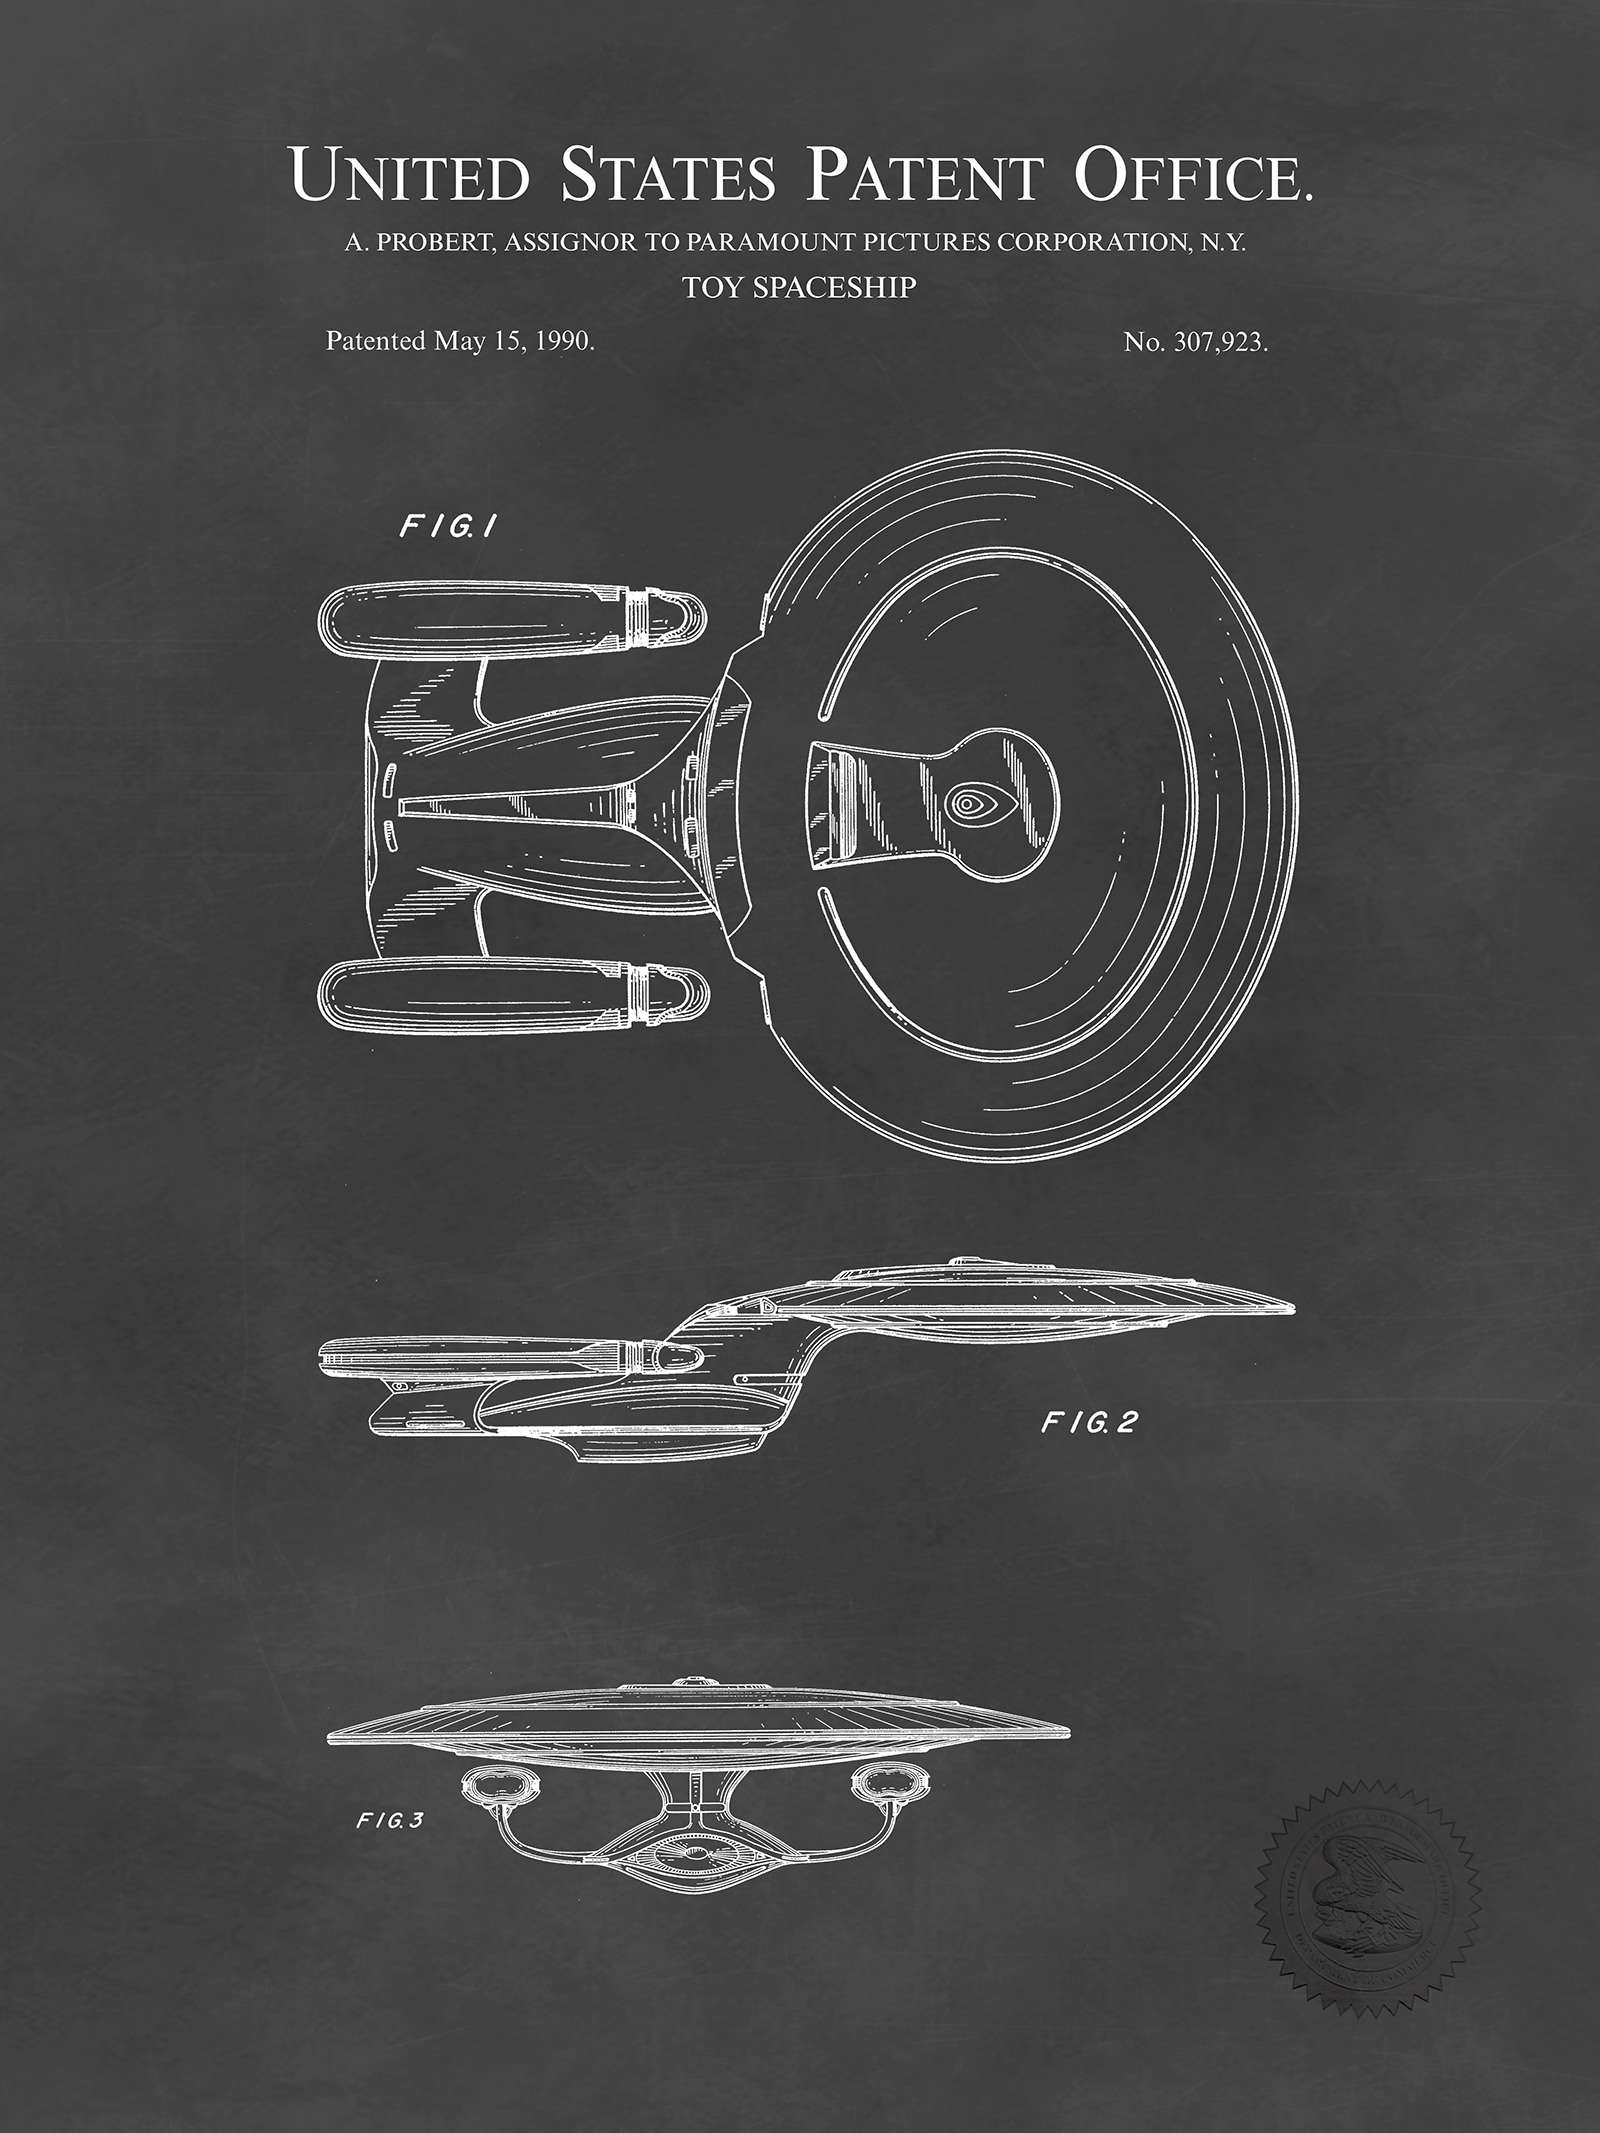 galaxy class starship blueprints